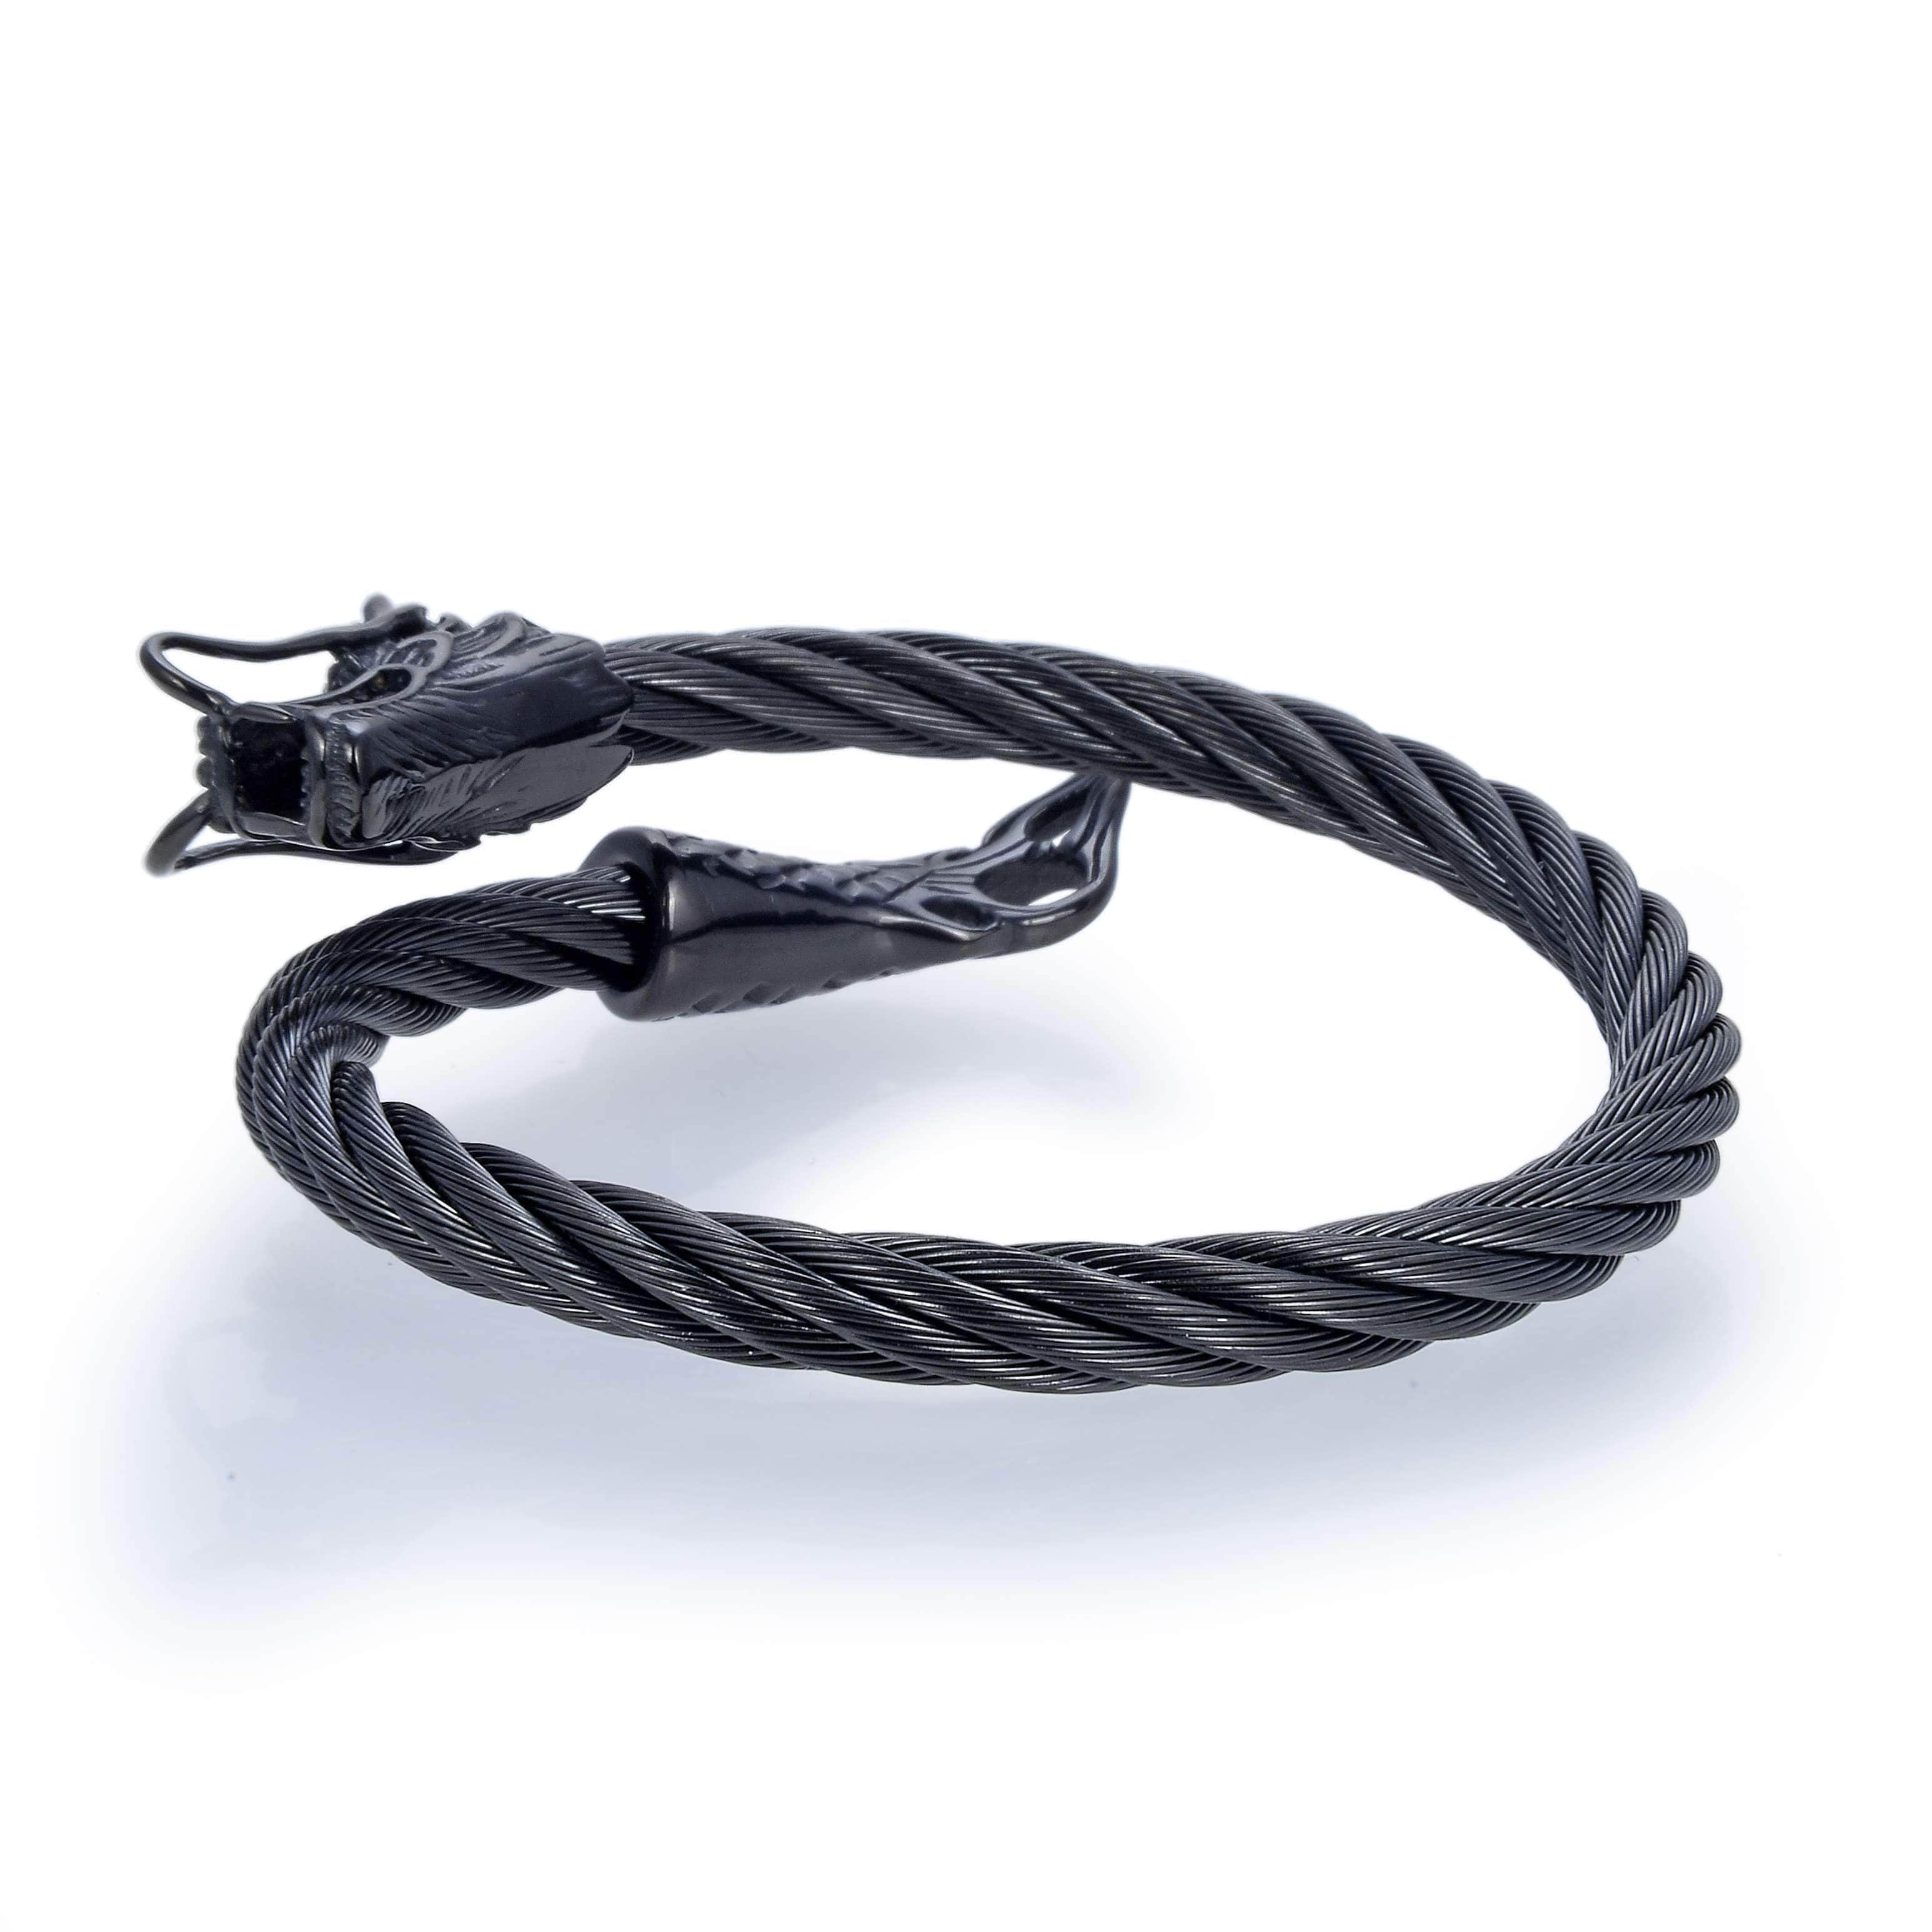 Kalifano Steel Hearts Jewelry Steel Hearts Black Rope Chain Chinese Dragon Tip Open Bangle Bracelet SHB200-55